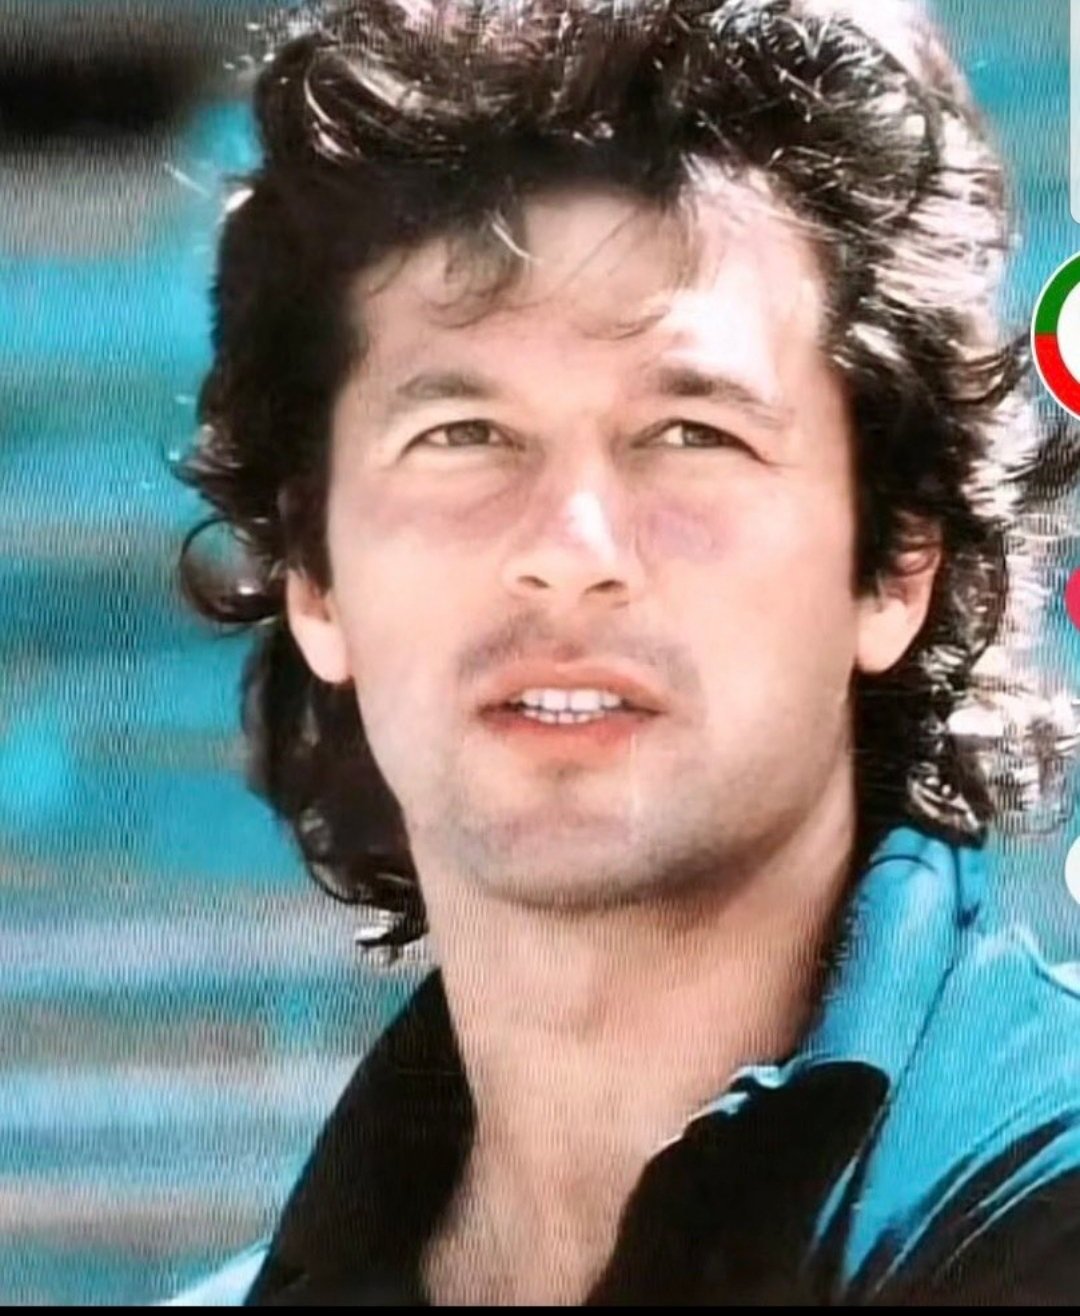 Imran Khan Singer - On My Way - New Song '22 - YouTube